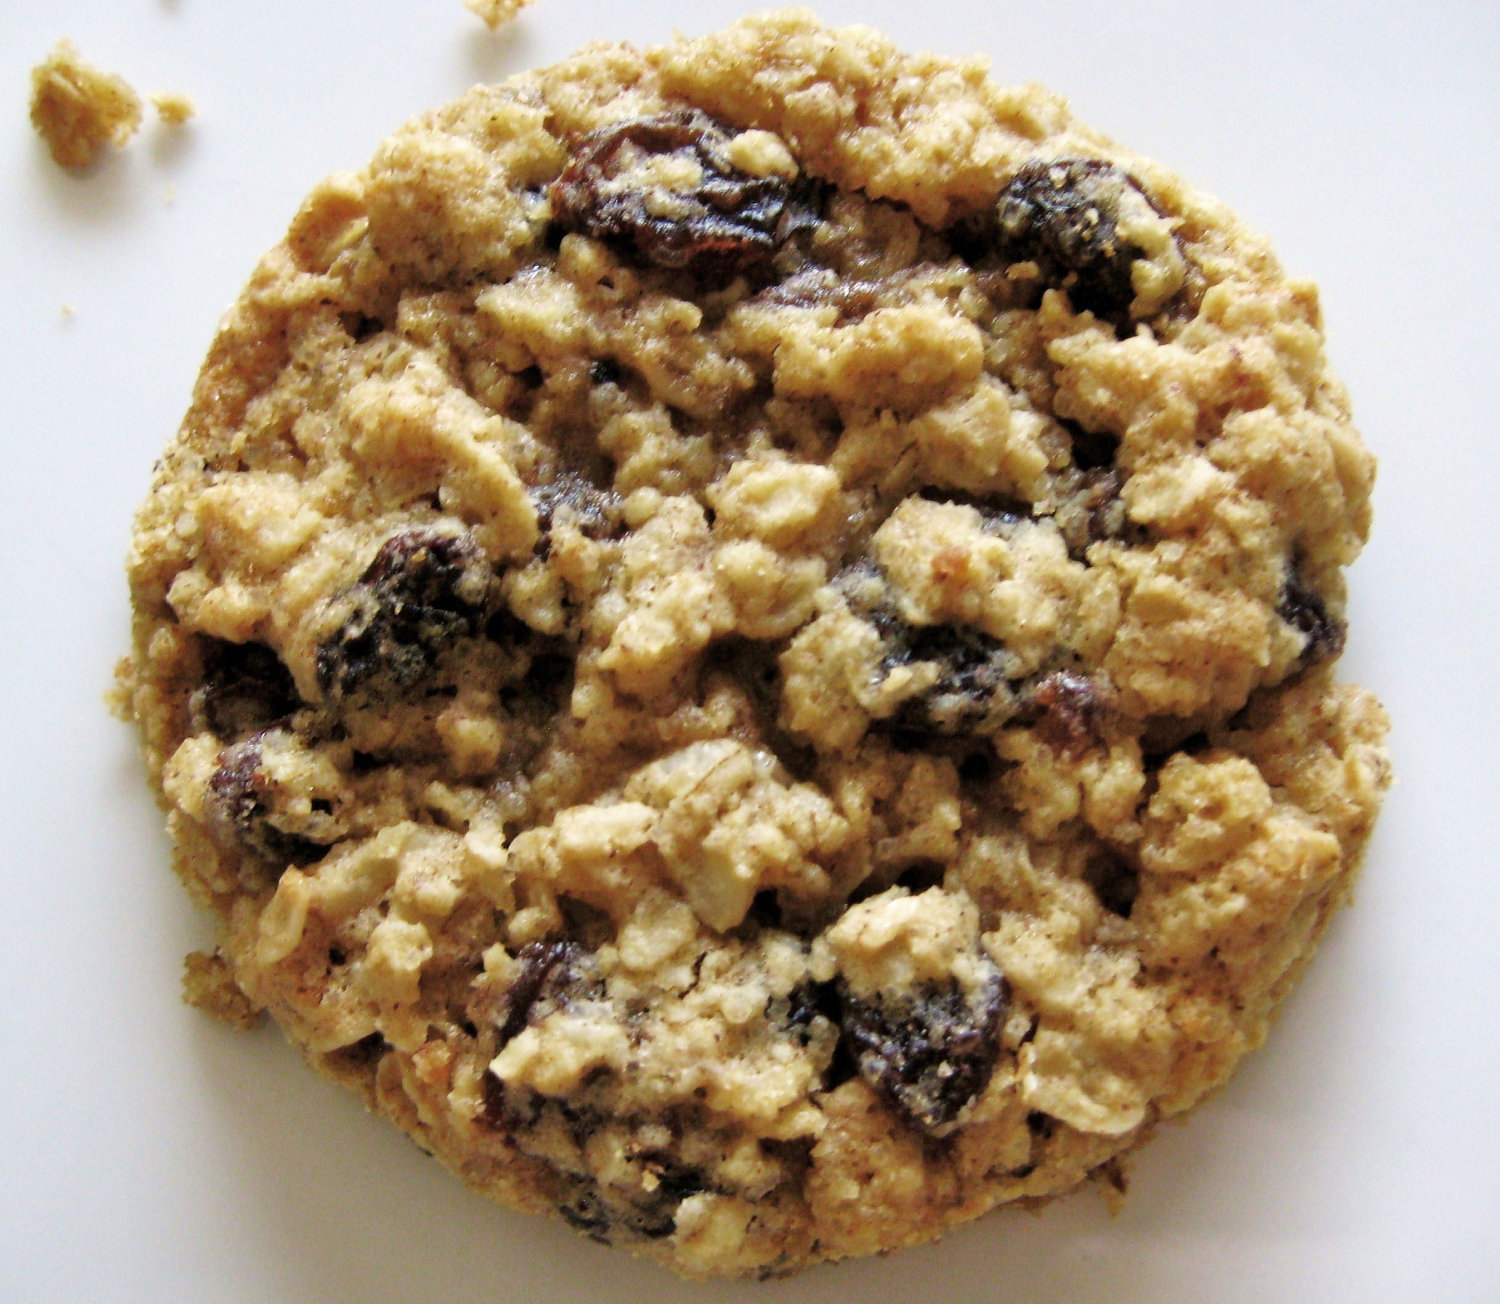 Oatmeal Raisin Cookies By Kristinandscott On Etsy